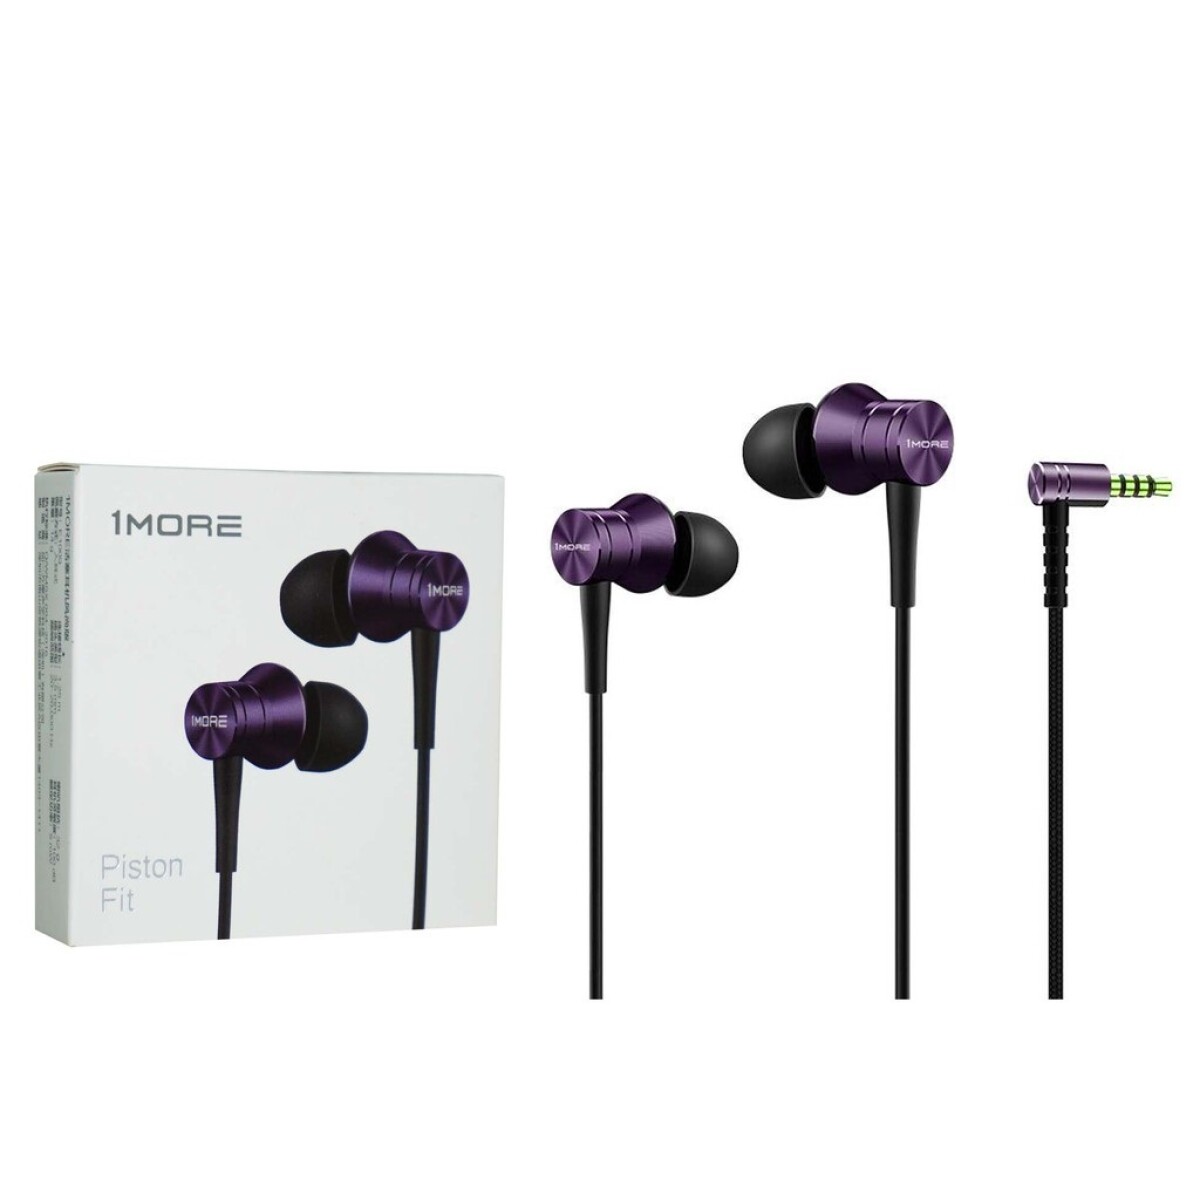 Auricular 1more Triple Driver In-ear Headphones Piston Fit Violeta 